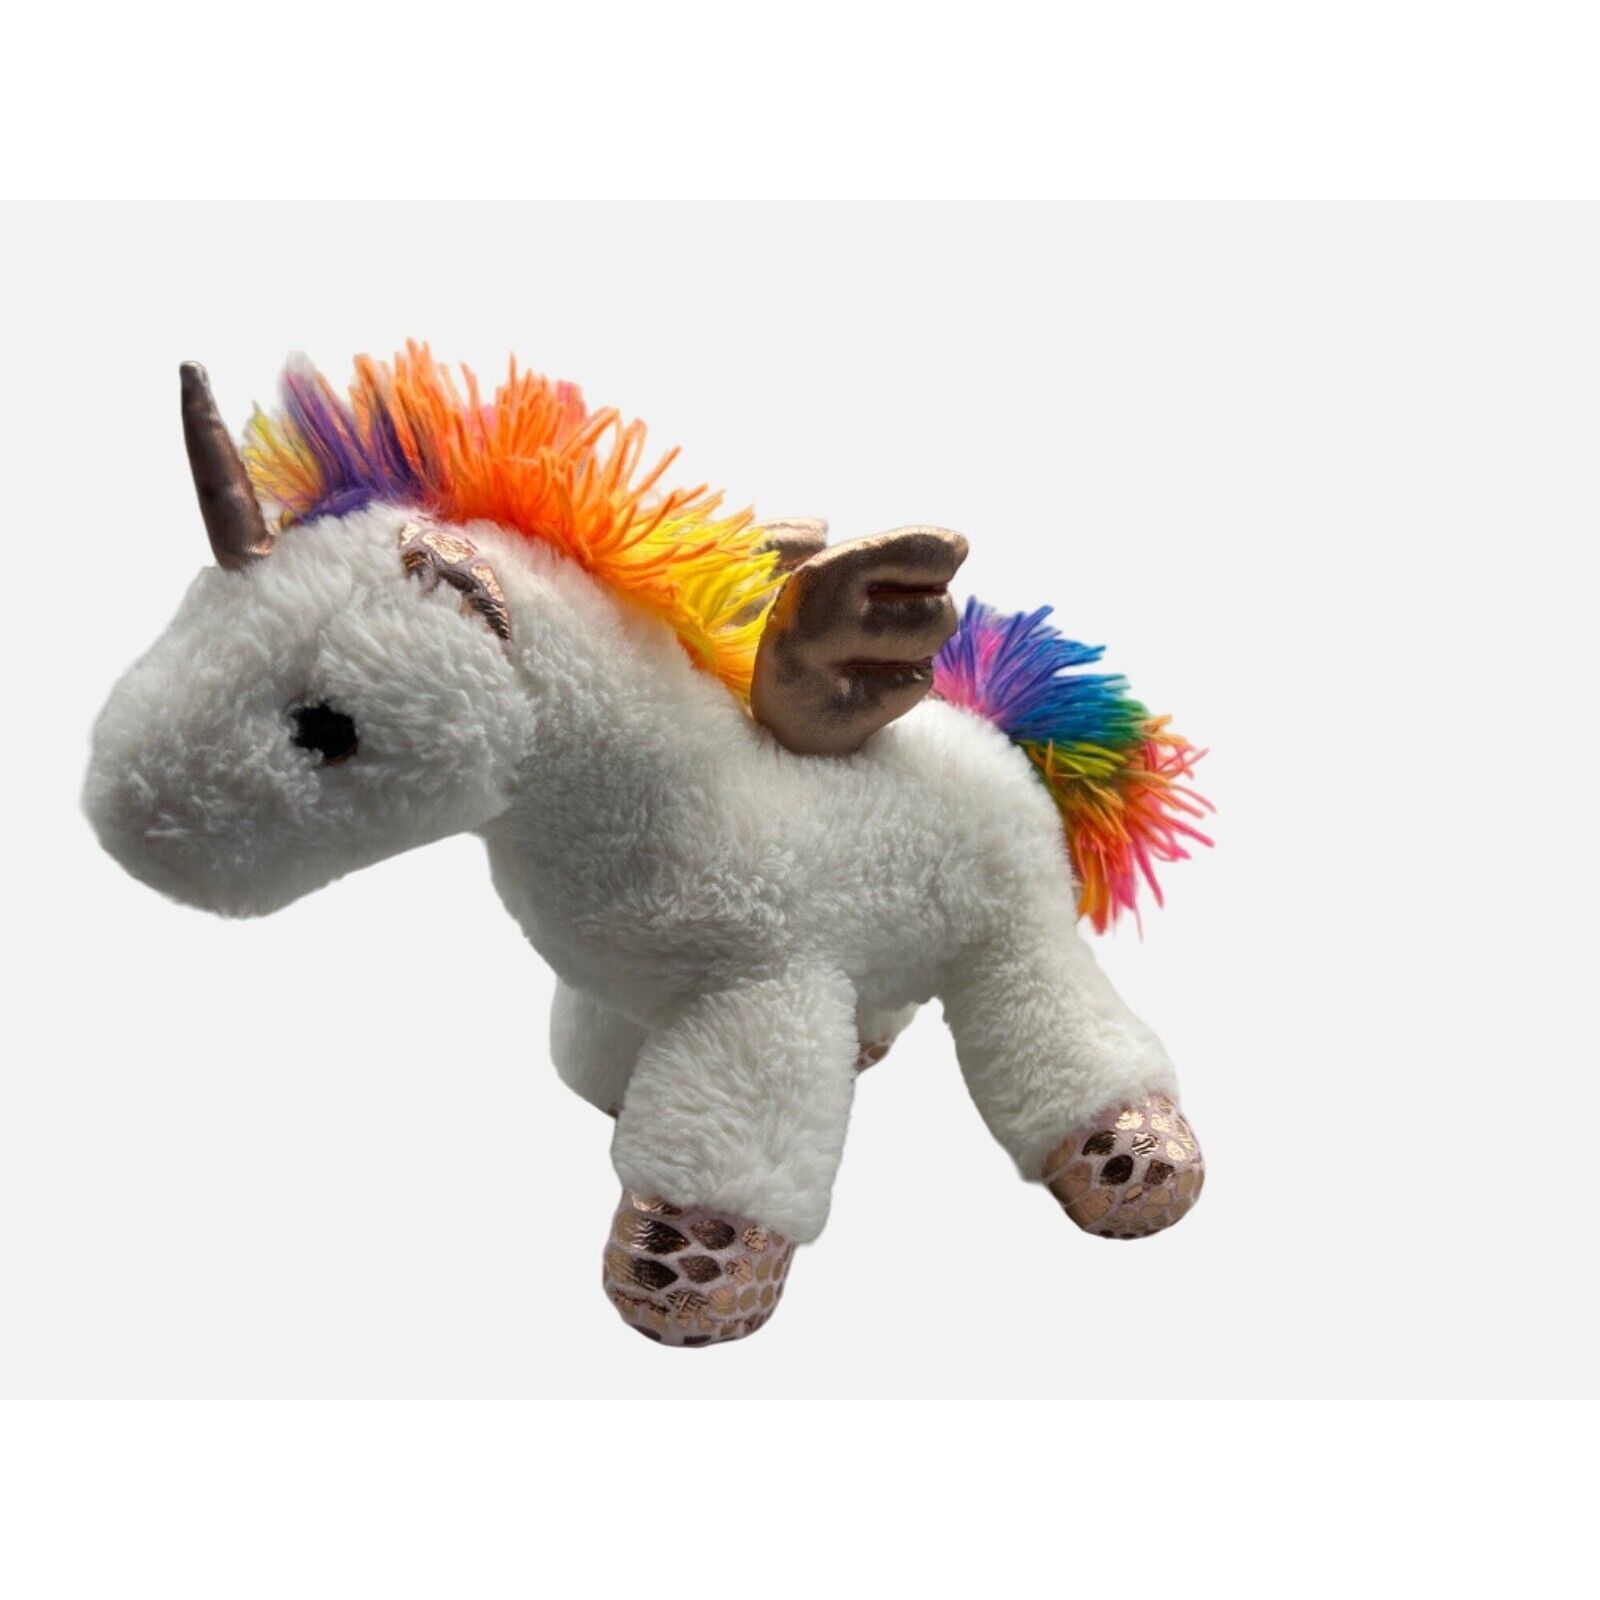 Kellytoy Rainbow Unicorn 11" Plush Animal Sparkly Colorful Yarn Mane & Tail 2019 - $13.09